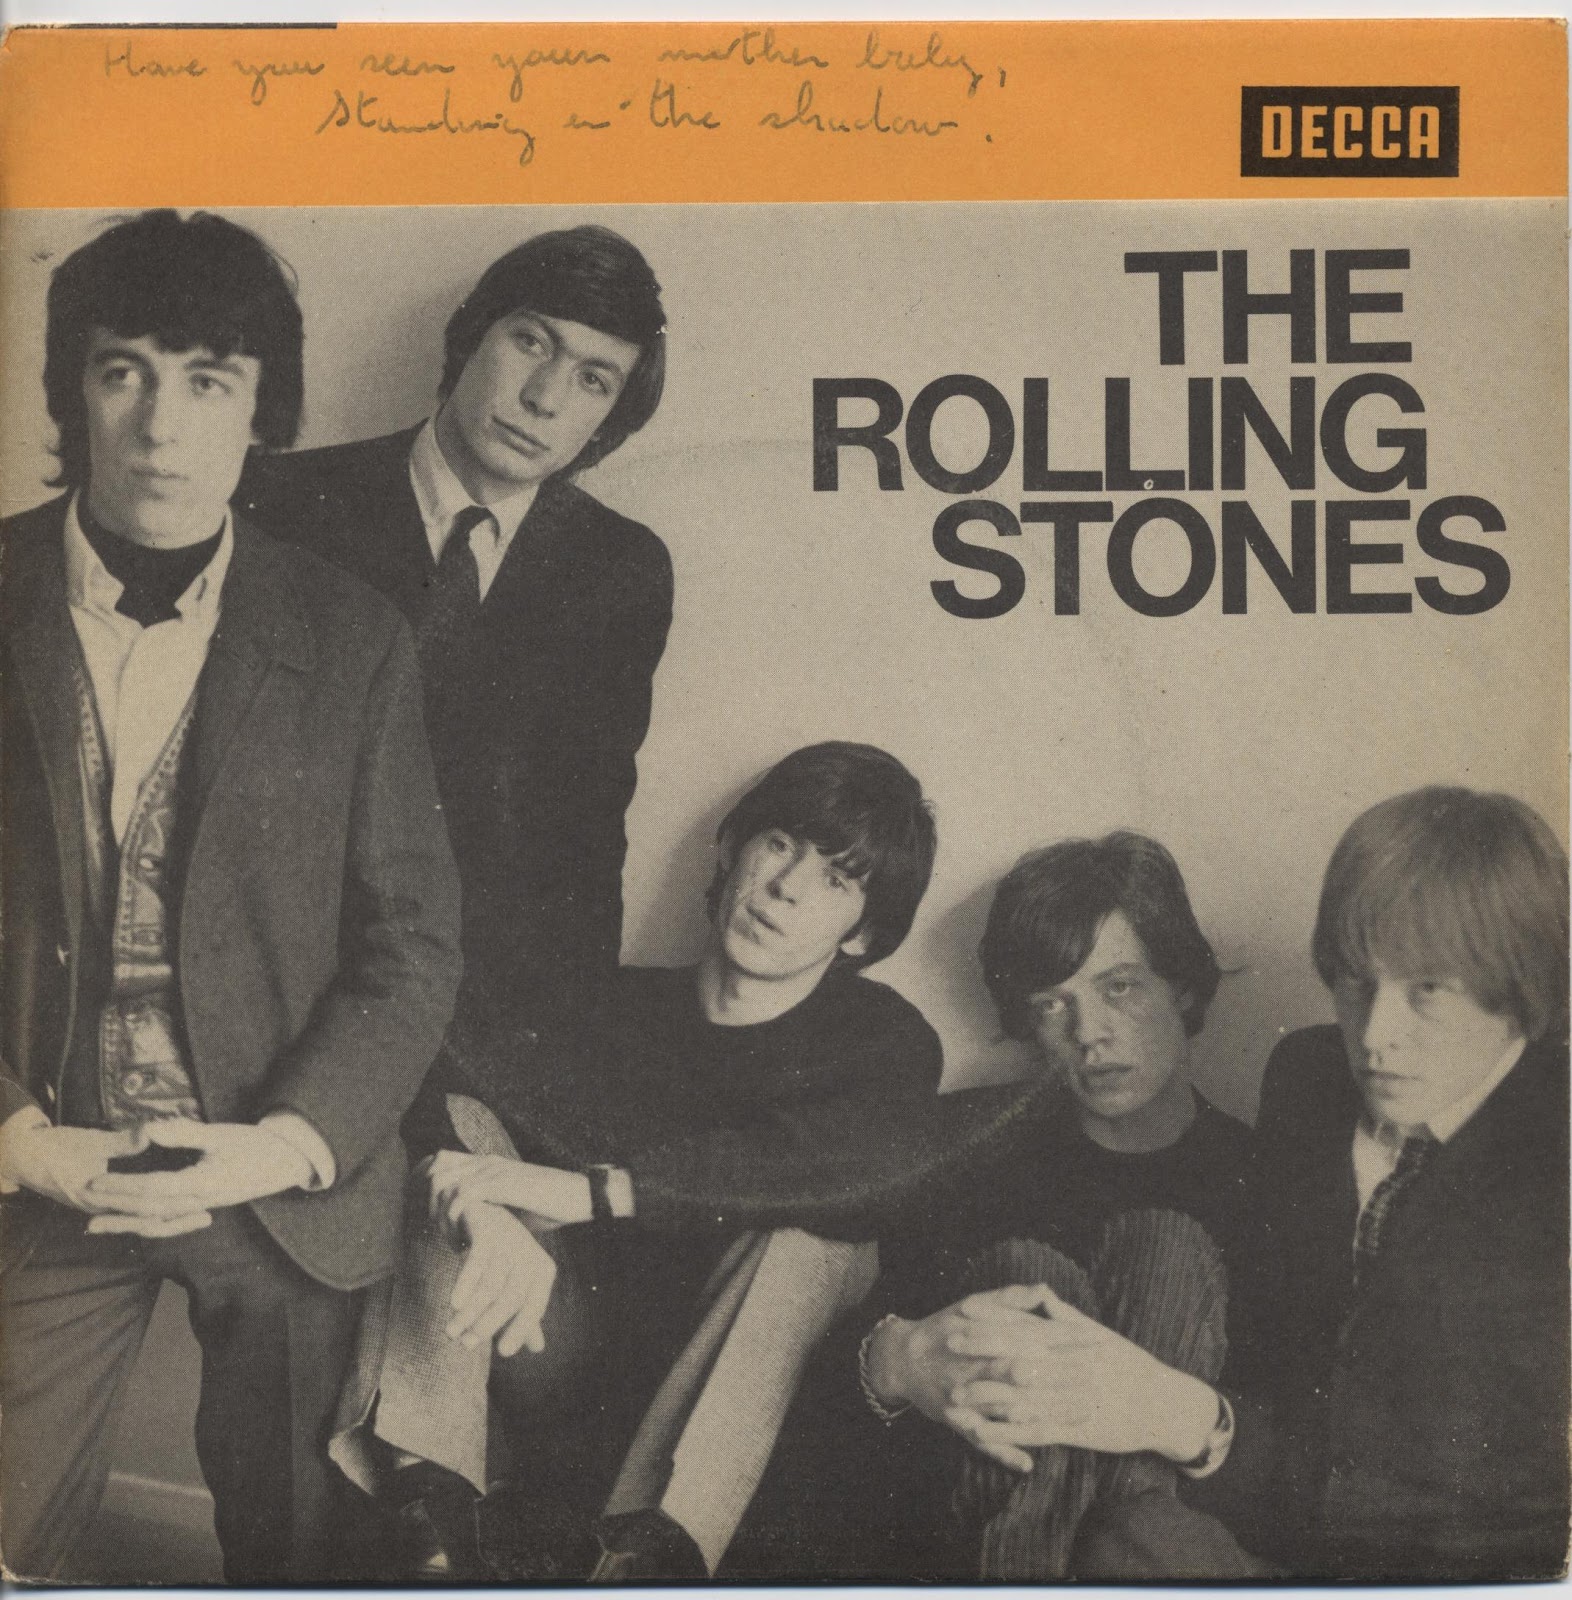 Rolling stones satisfaction. Роллинг стоунз 1965. Группа the Rolling Stones альбомы. The Rolling Stones - "the Rolling Stones, Now!" (1965). Роллинг стоунз альбом 1995.